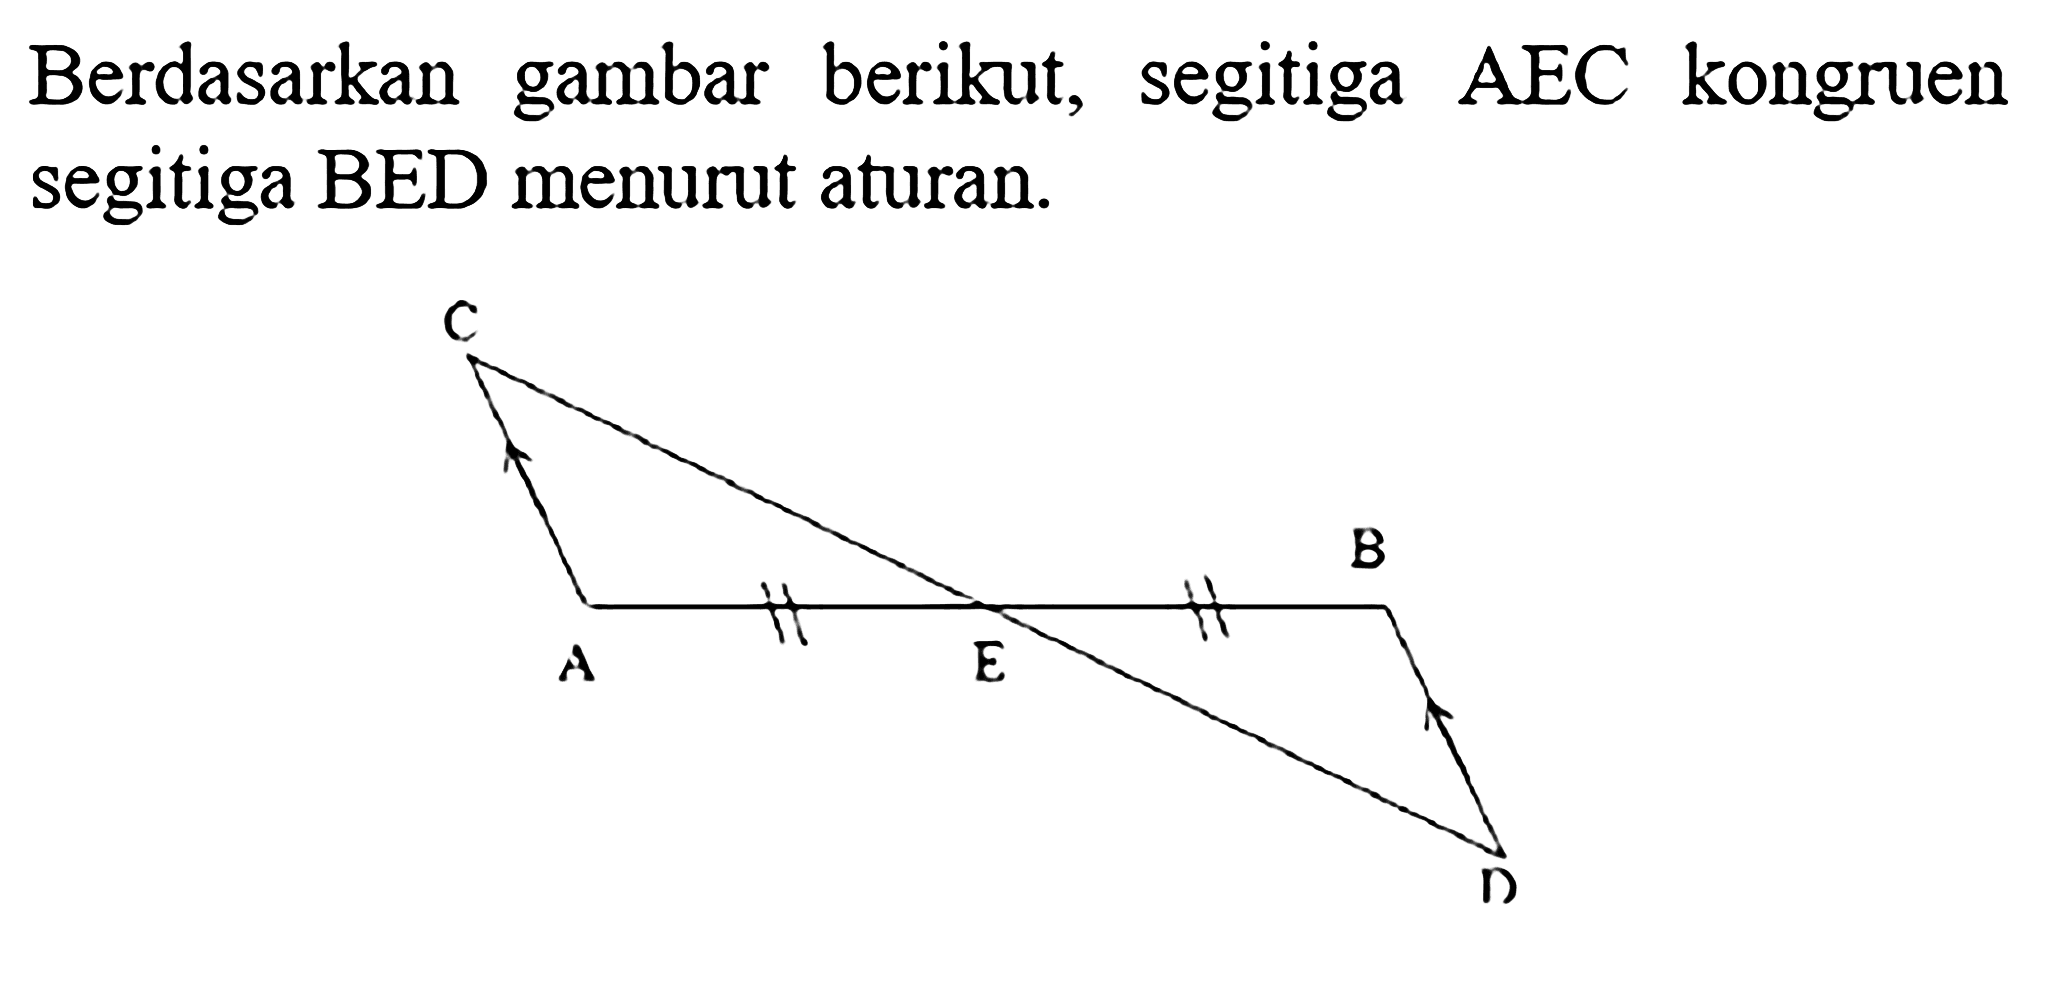 Berdasarkan gambar berikut, segitiga AEC kongruen segitiga BED menurut aturan.